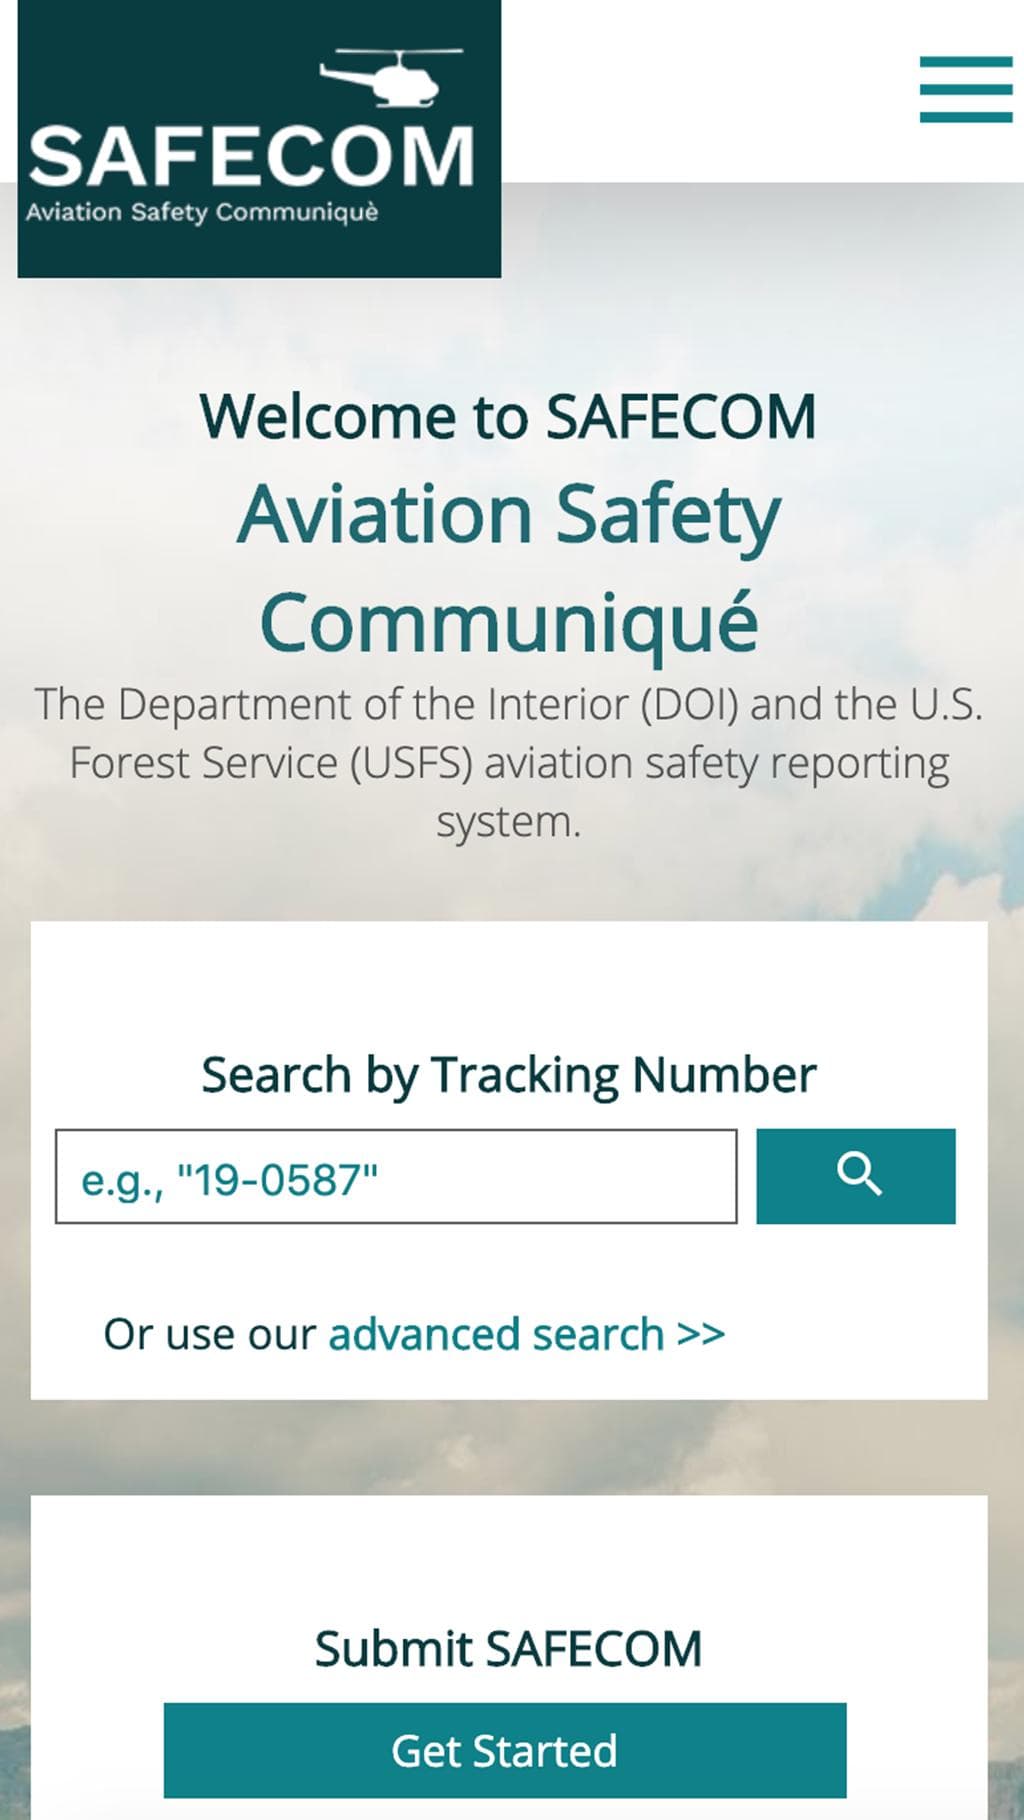 Screen shot of Safecom.